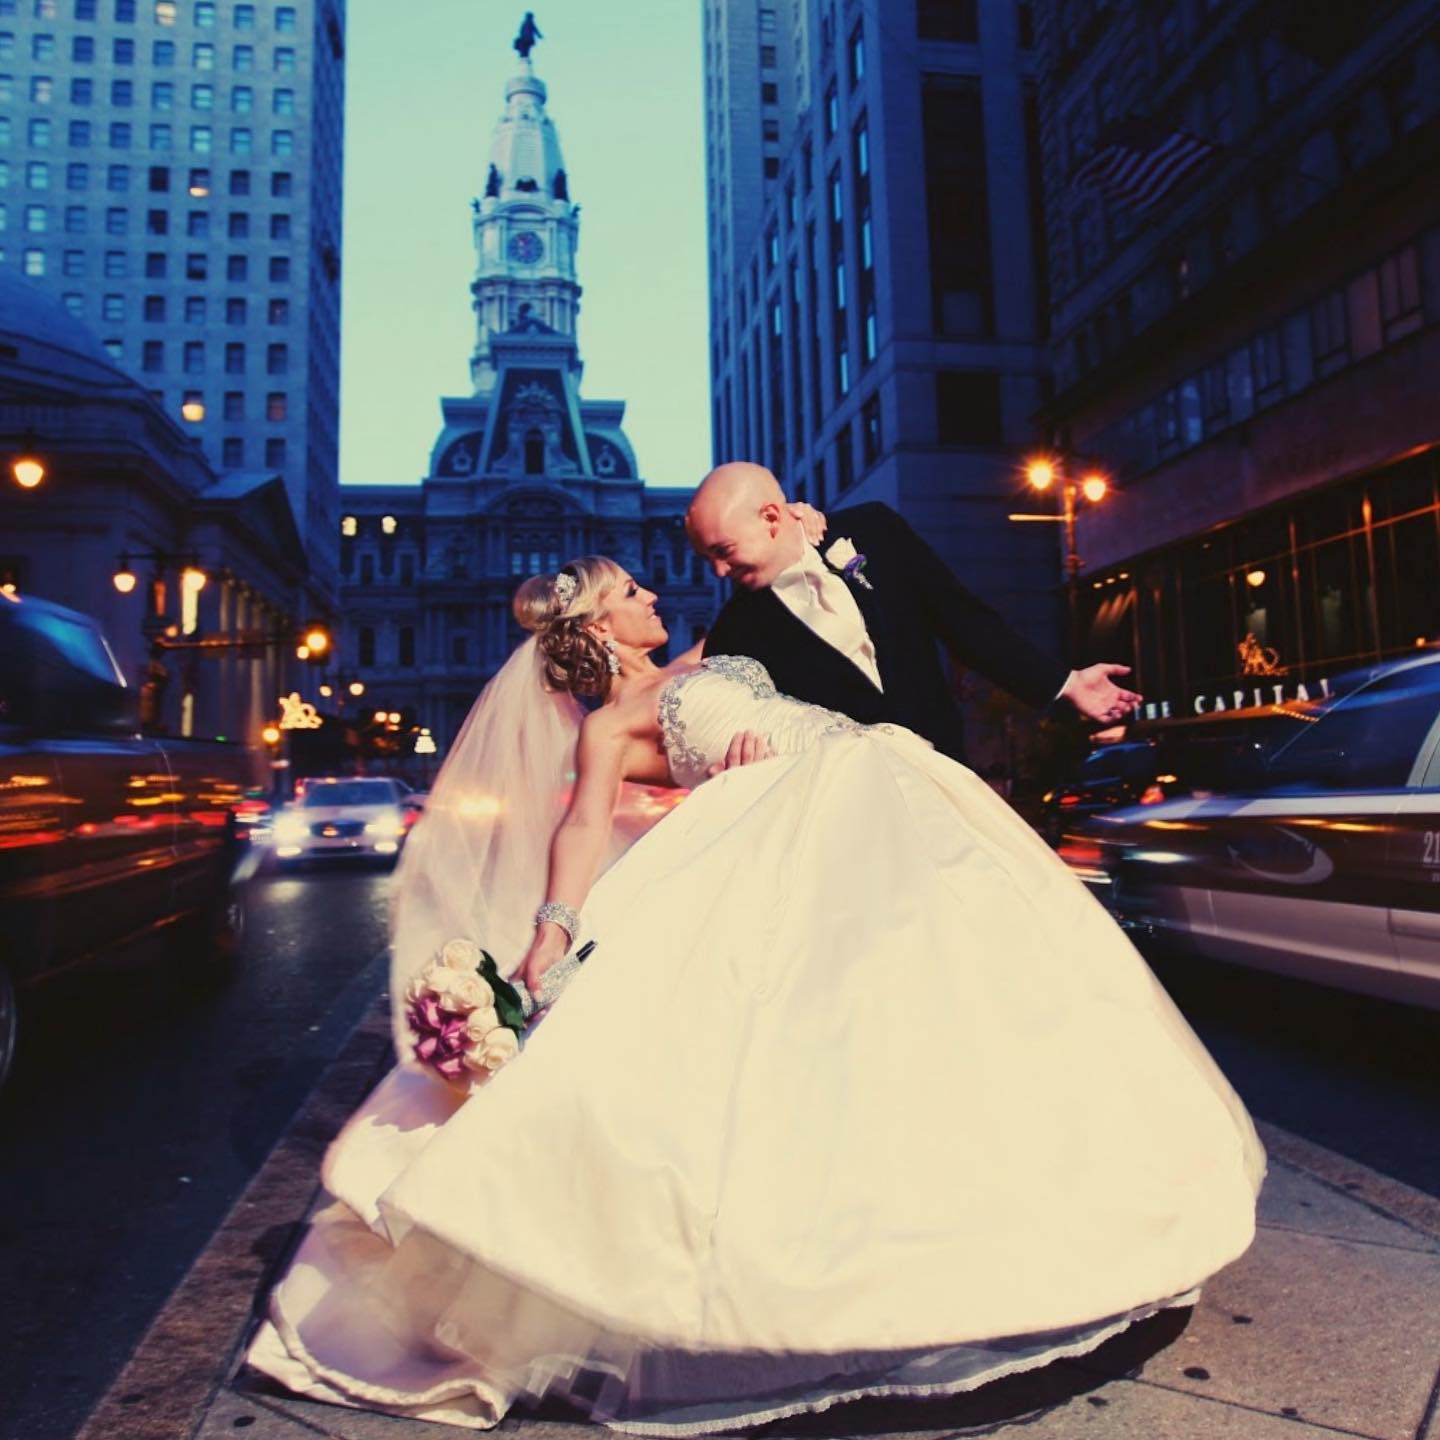 wedding photo at city hall